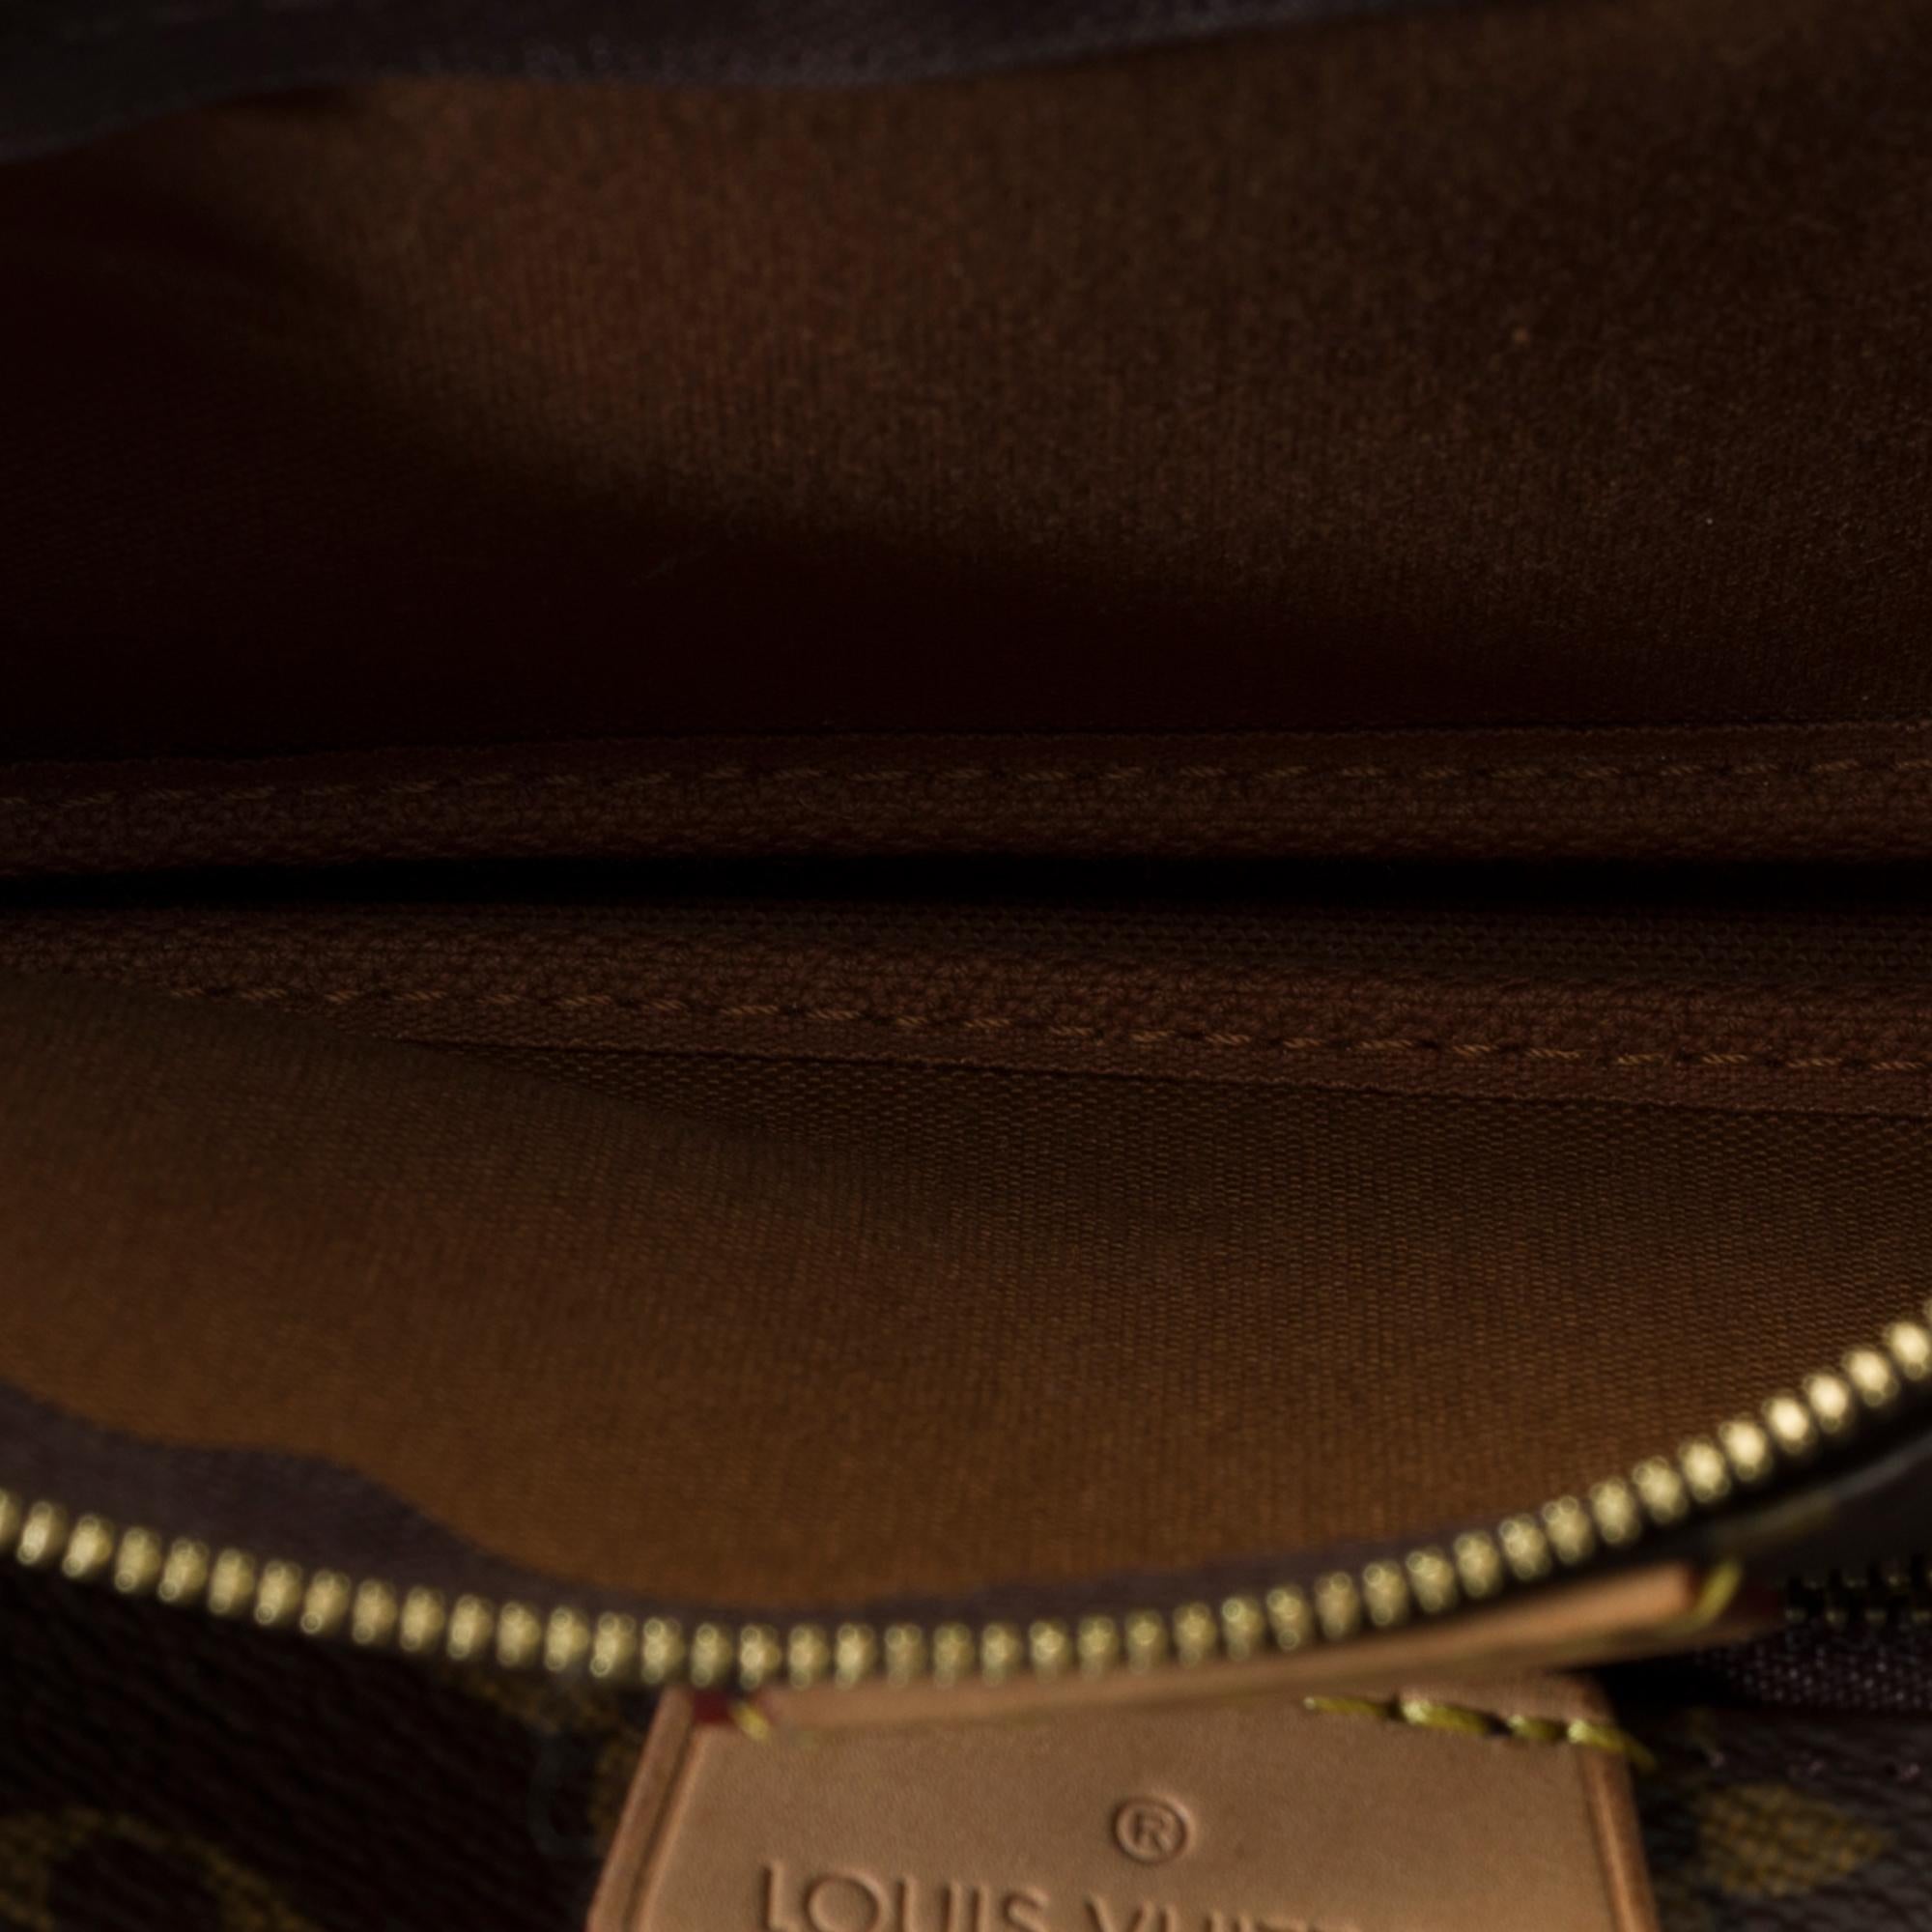 Louis Vuitton Multi-Pochette in brown monogram canvas, GHW For Sale 5